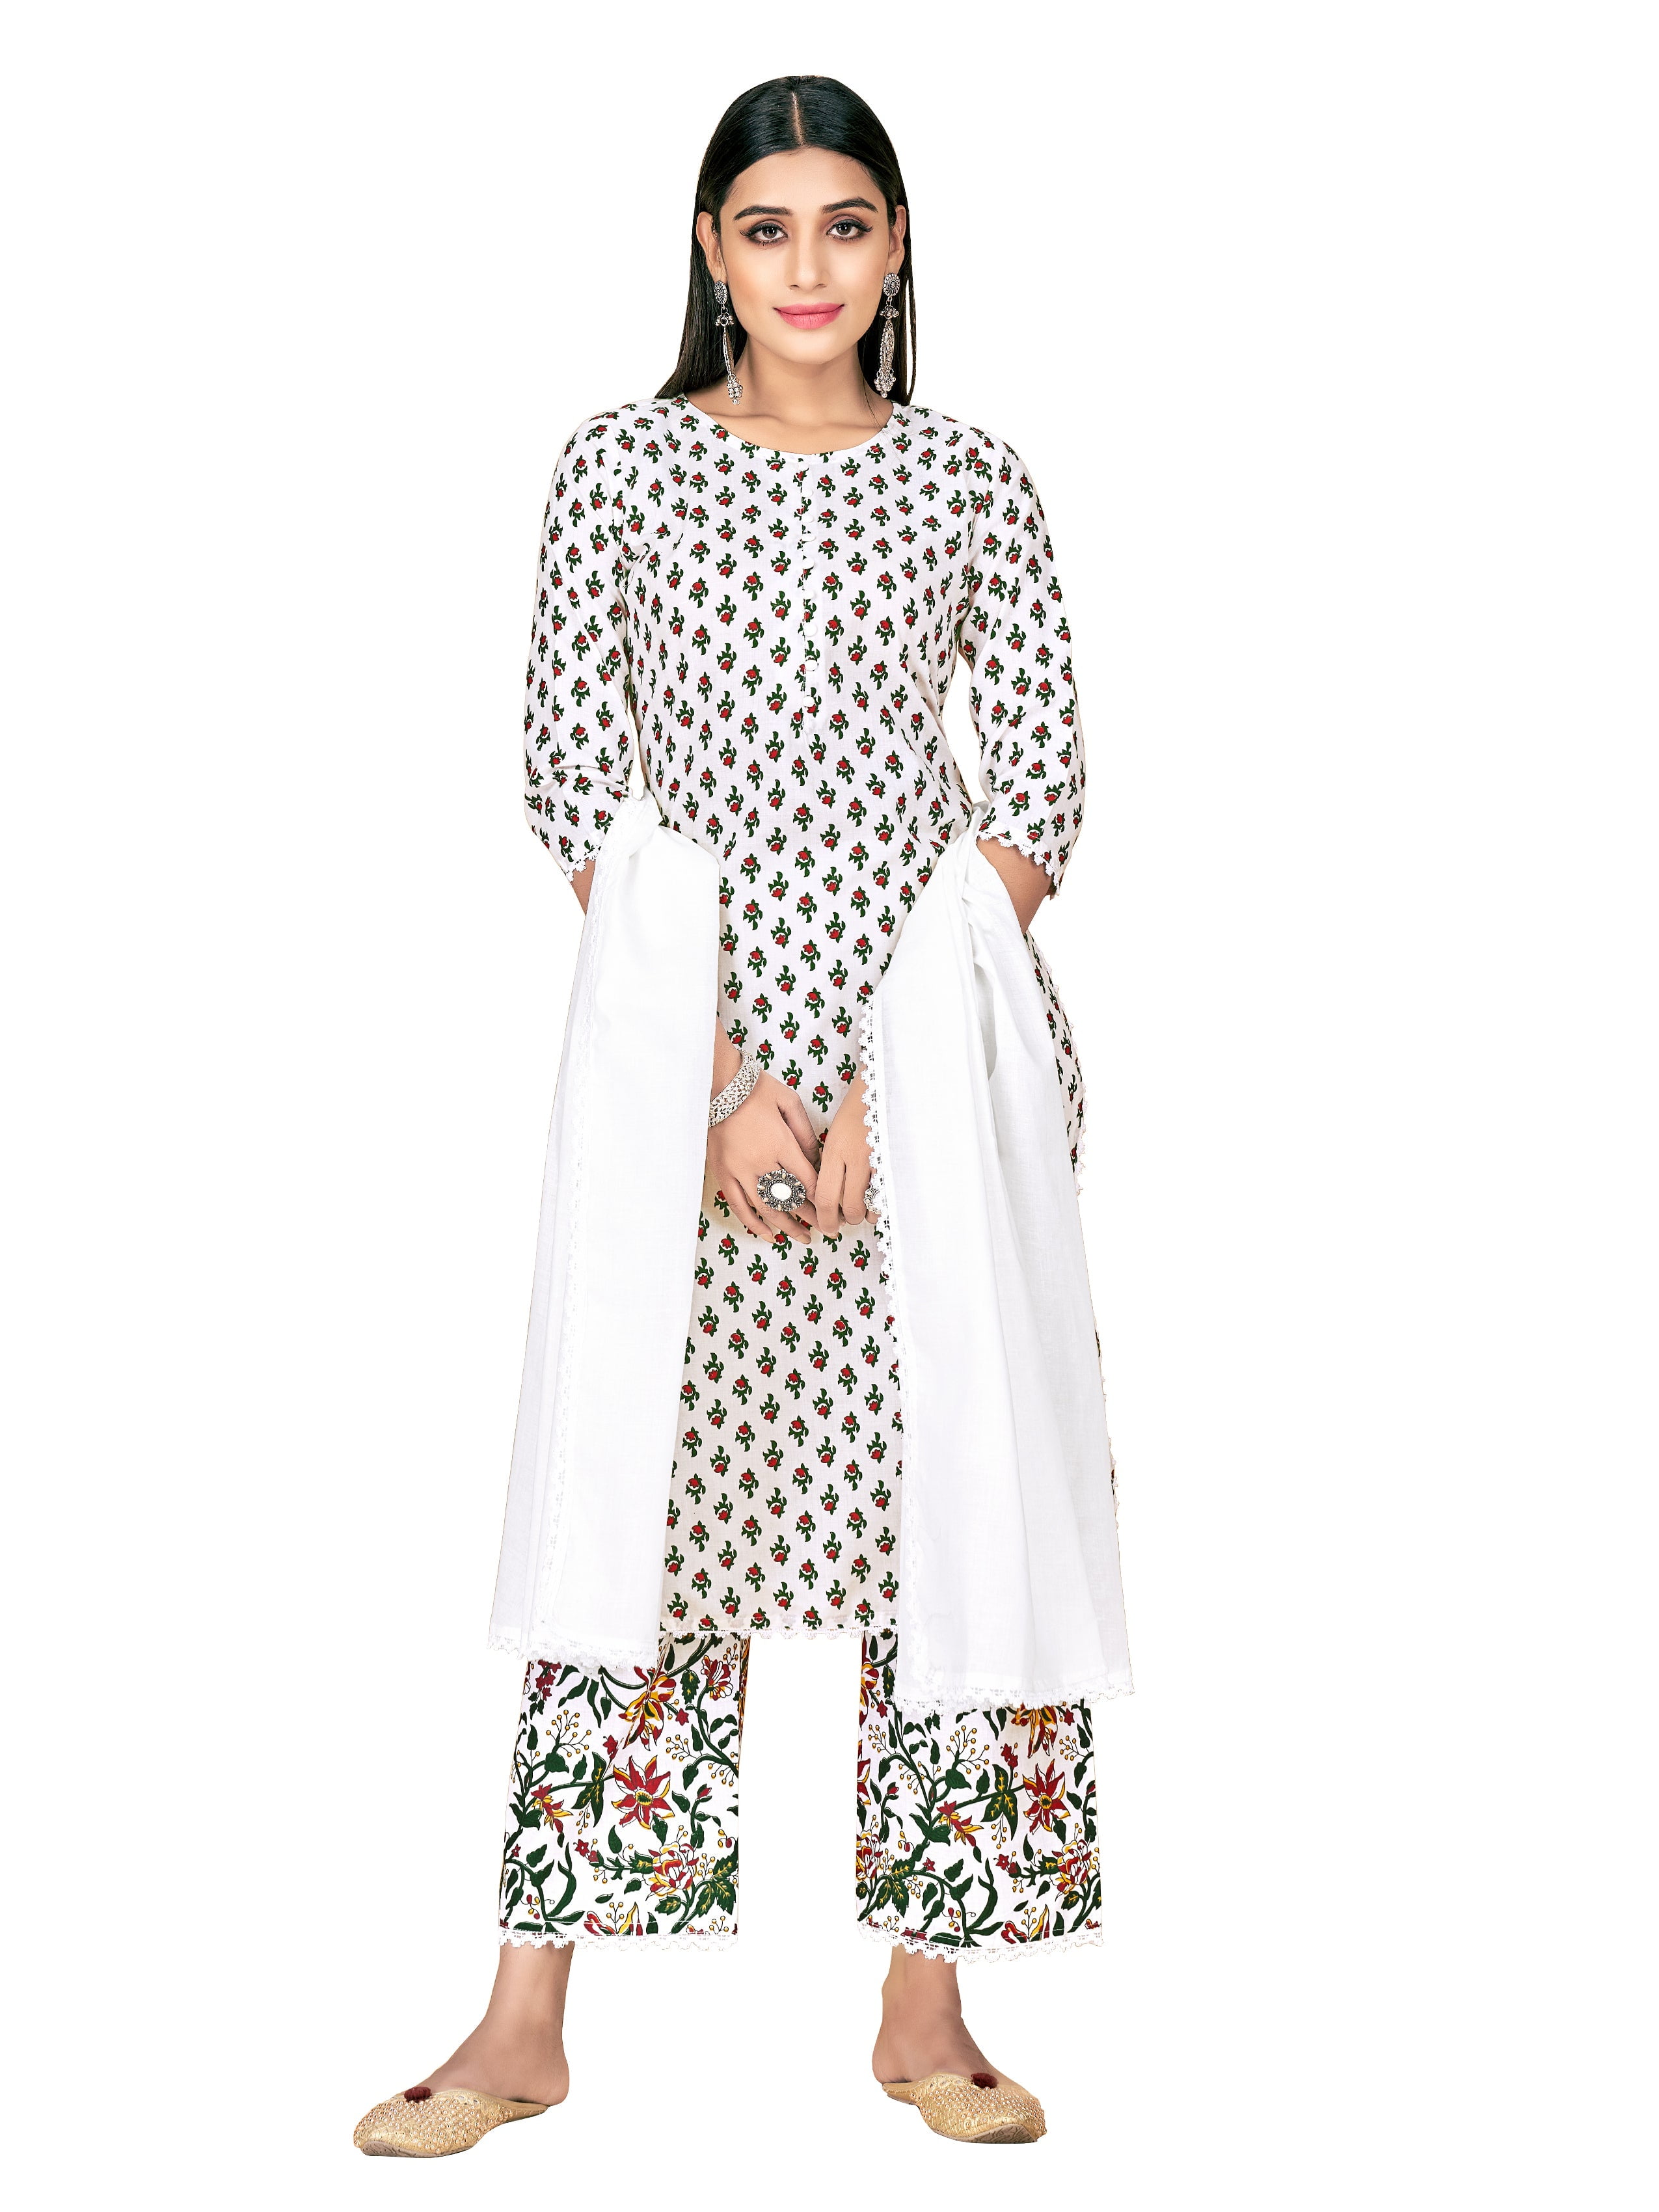 White Kurtis Online - Buy Plain White Kurti Designs for Women